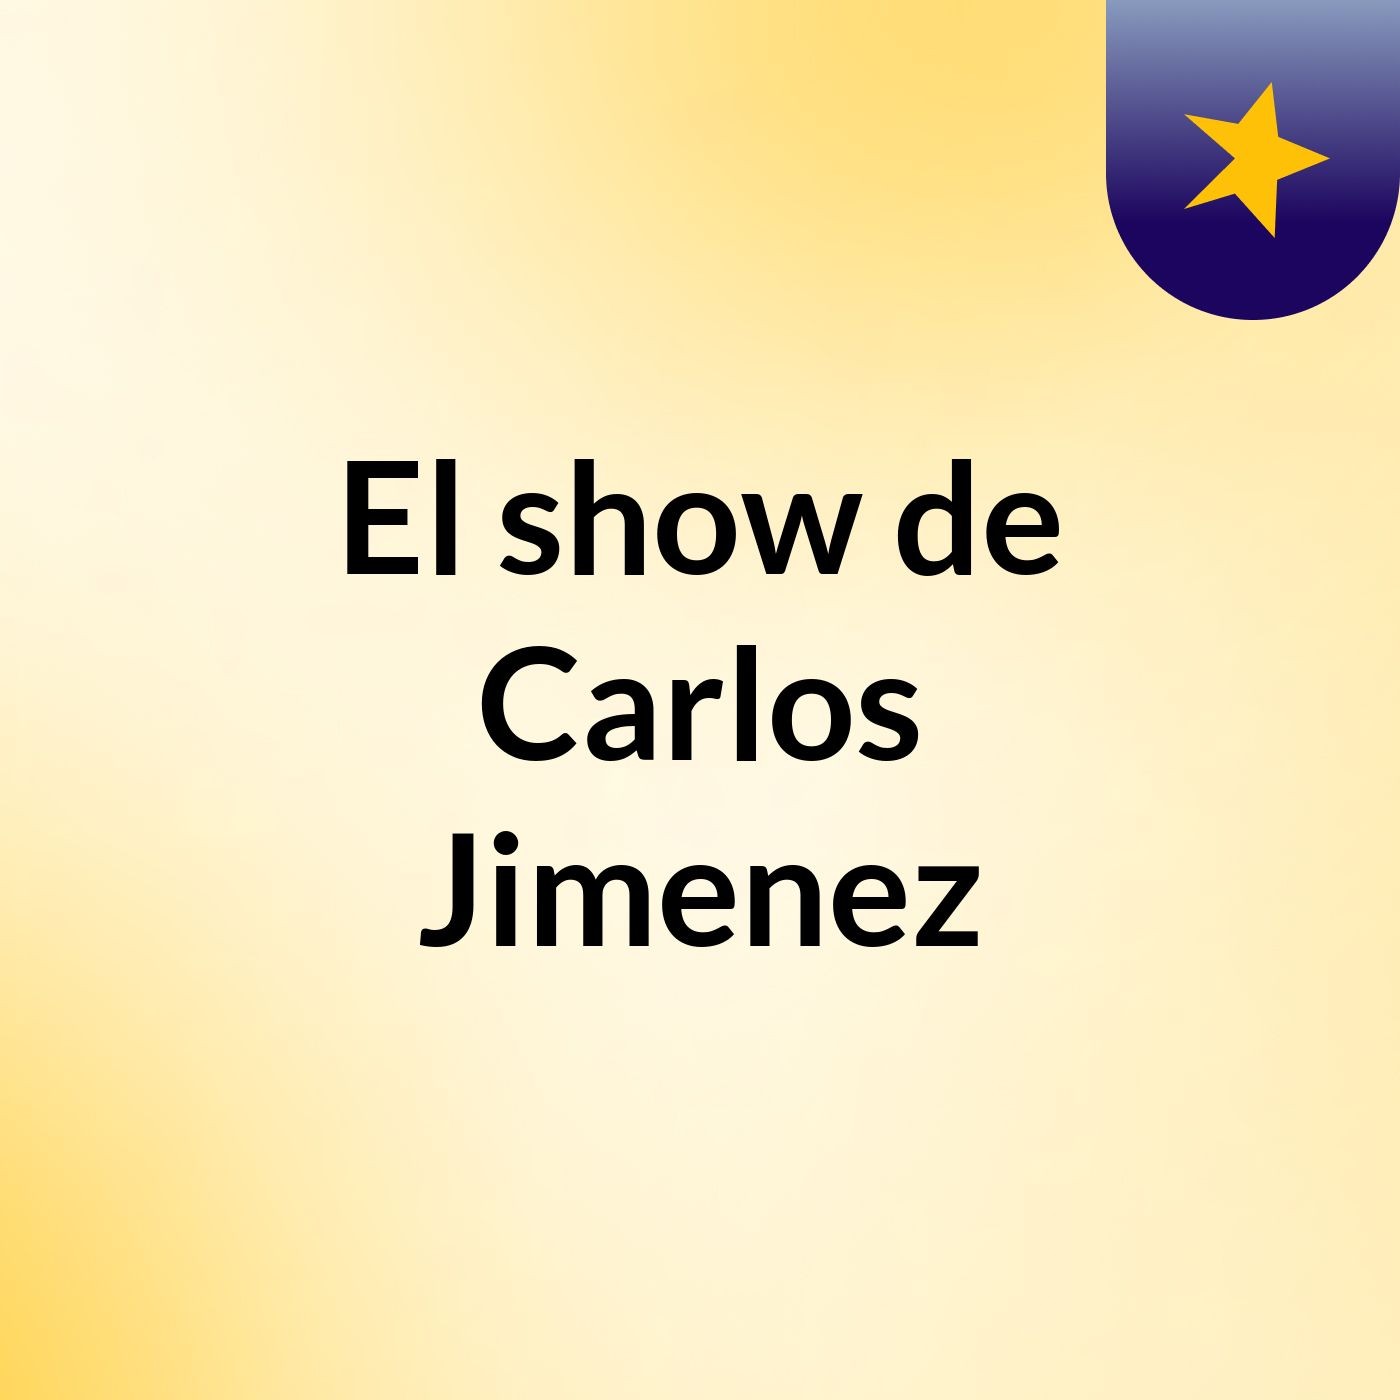 El show de Carlos Jimenez